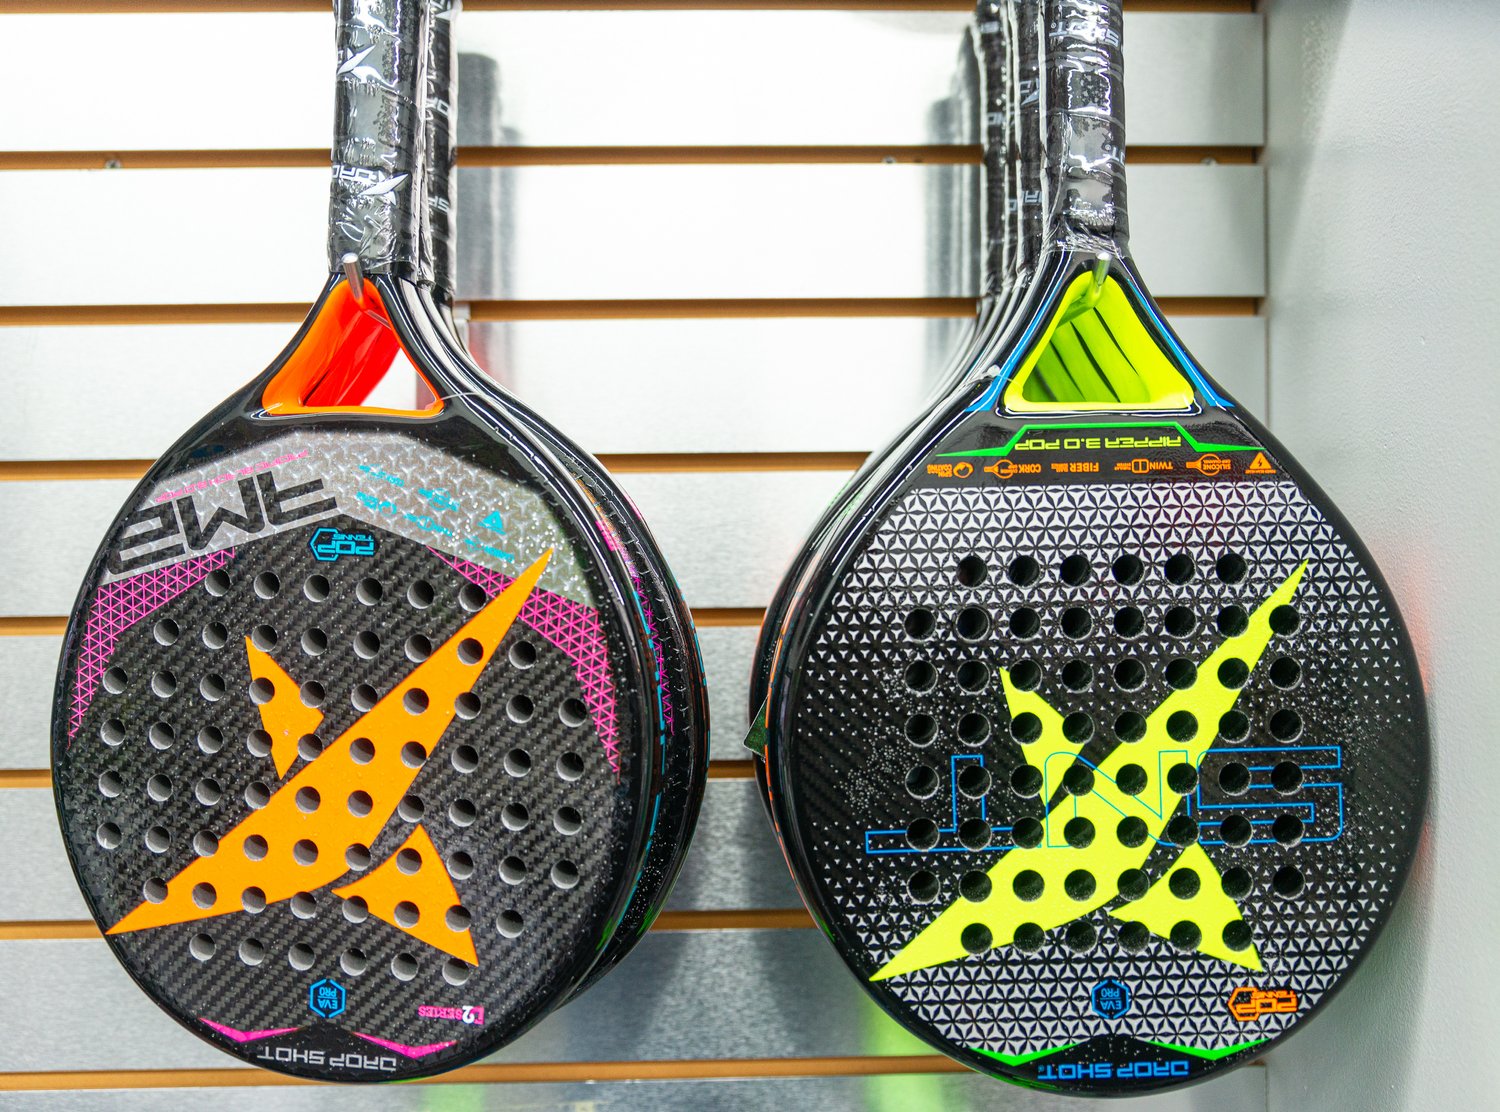 Ruddy Slægtsforskning abort POP Tennis Paddles Adidas and Drop Shot — NYC RACQUET SPORTS